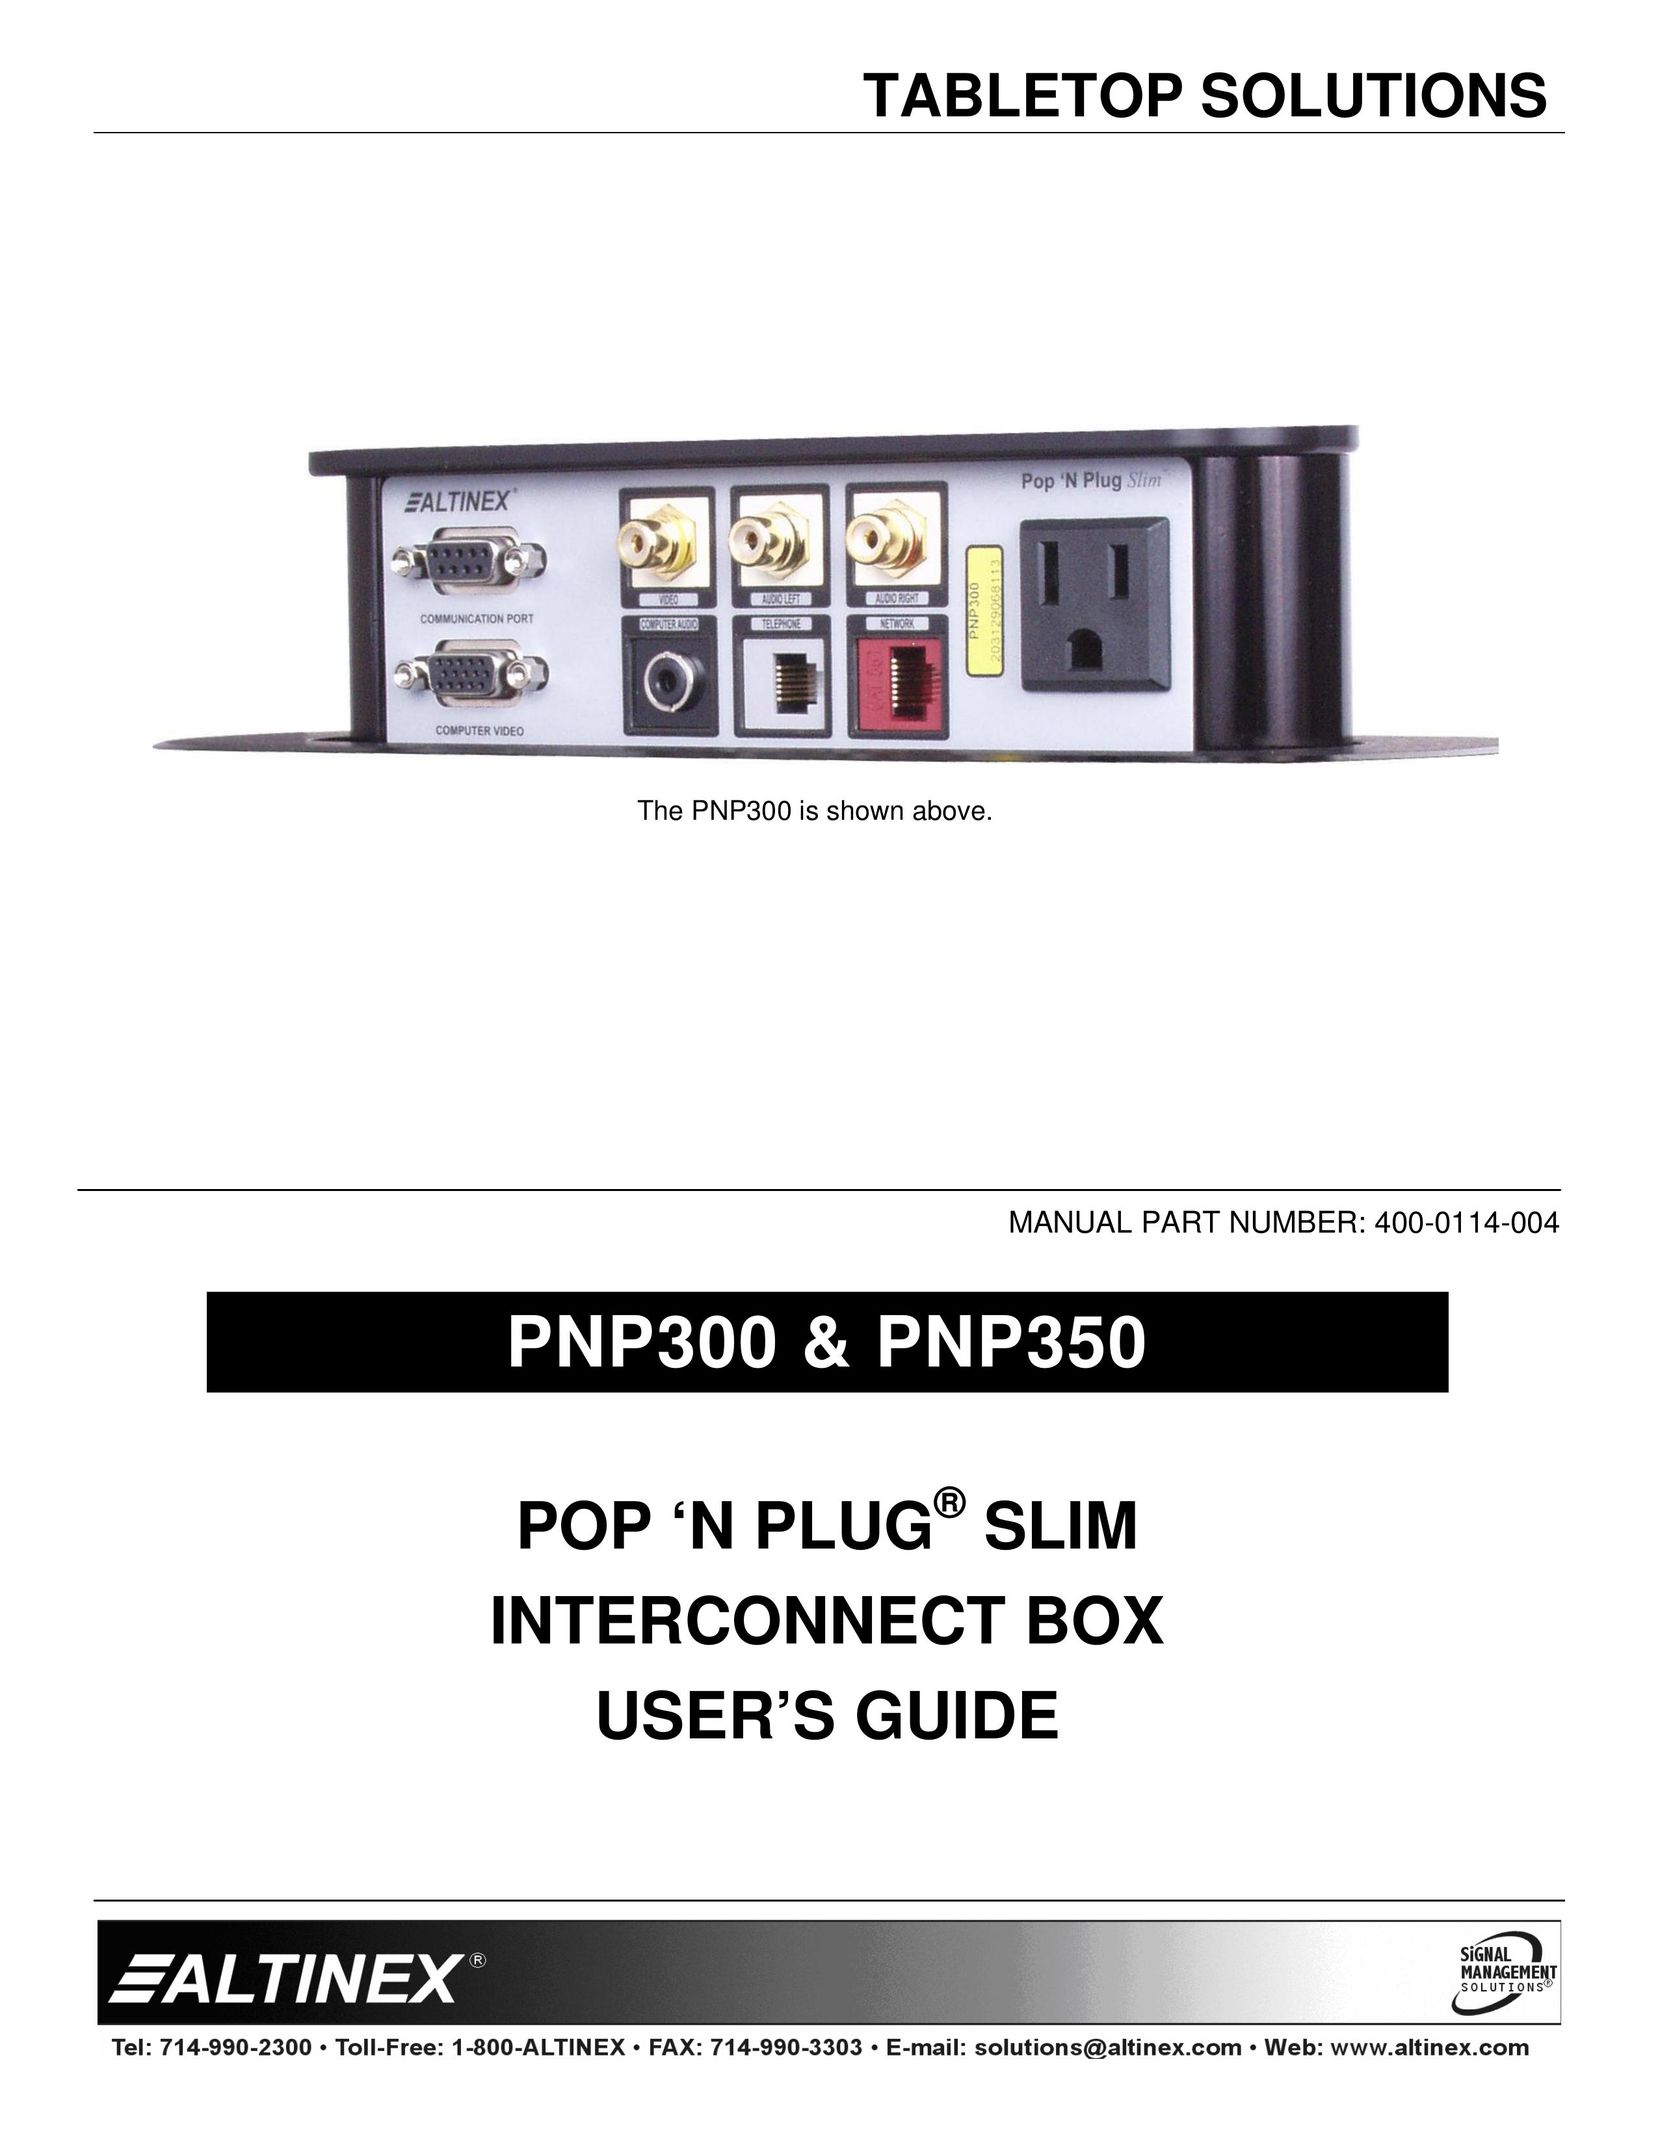 Altinex PNP350 Network Card User Manual